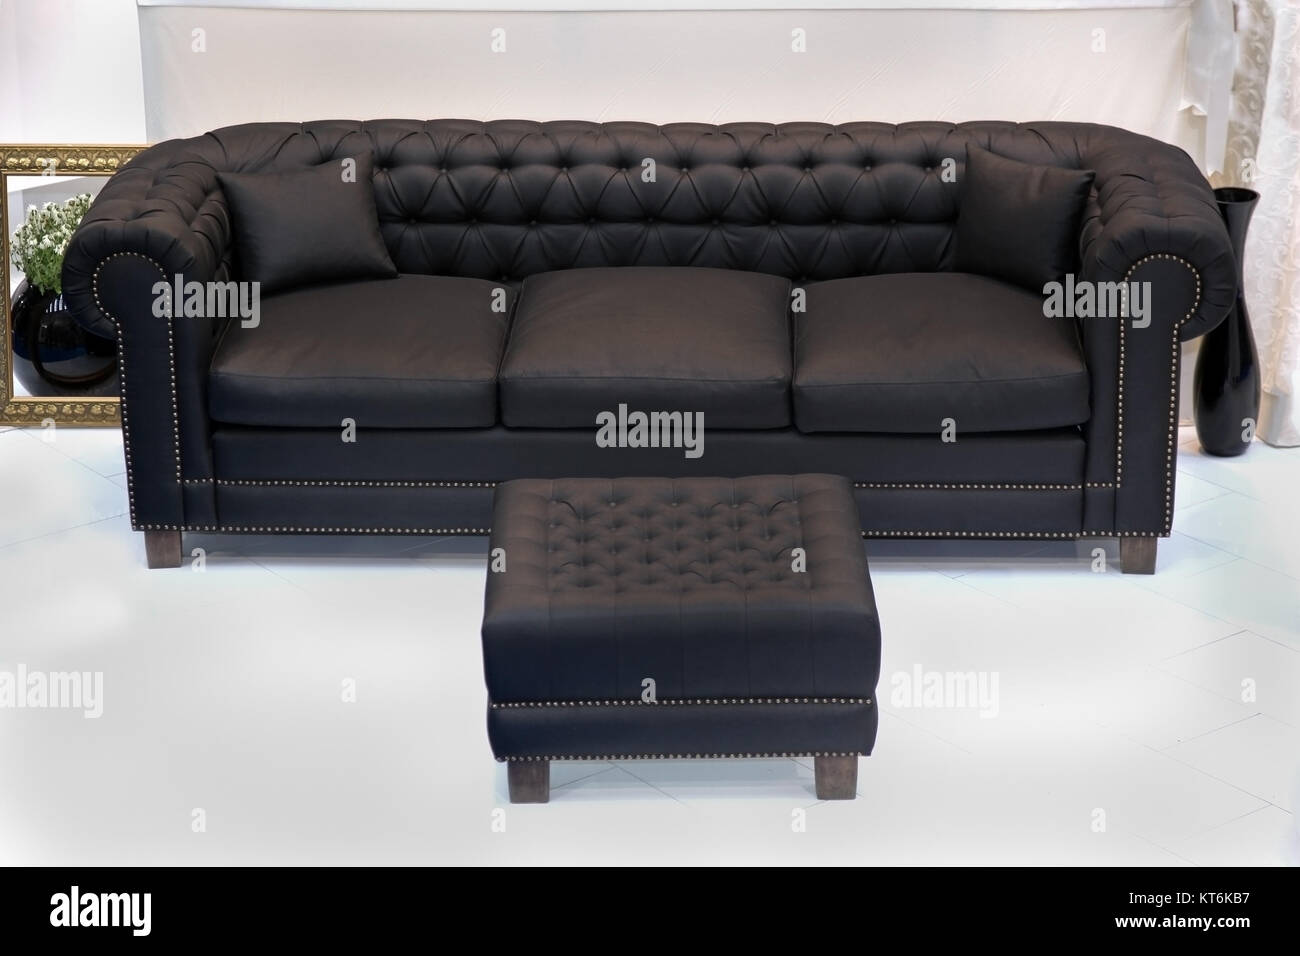 Black leather vintage sofa with leg rest ottoman Stock Photo - Alamy